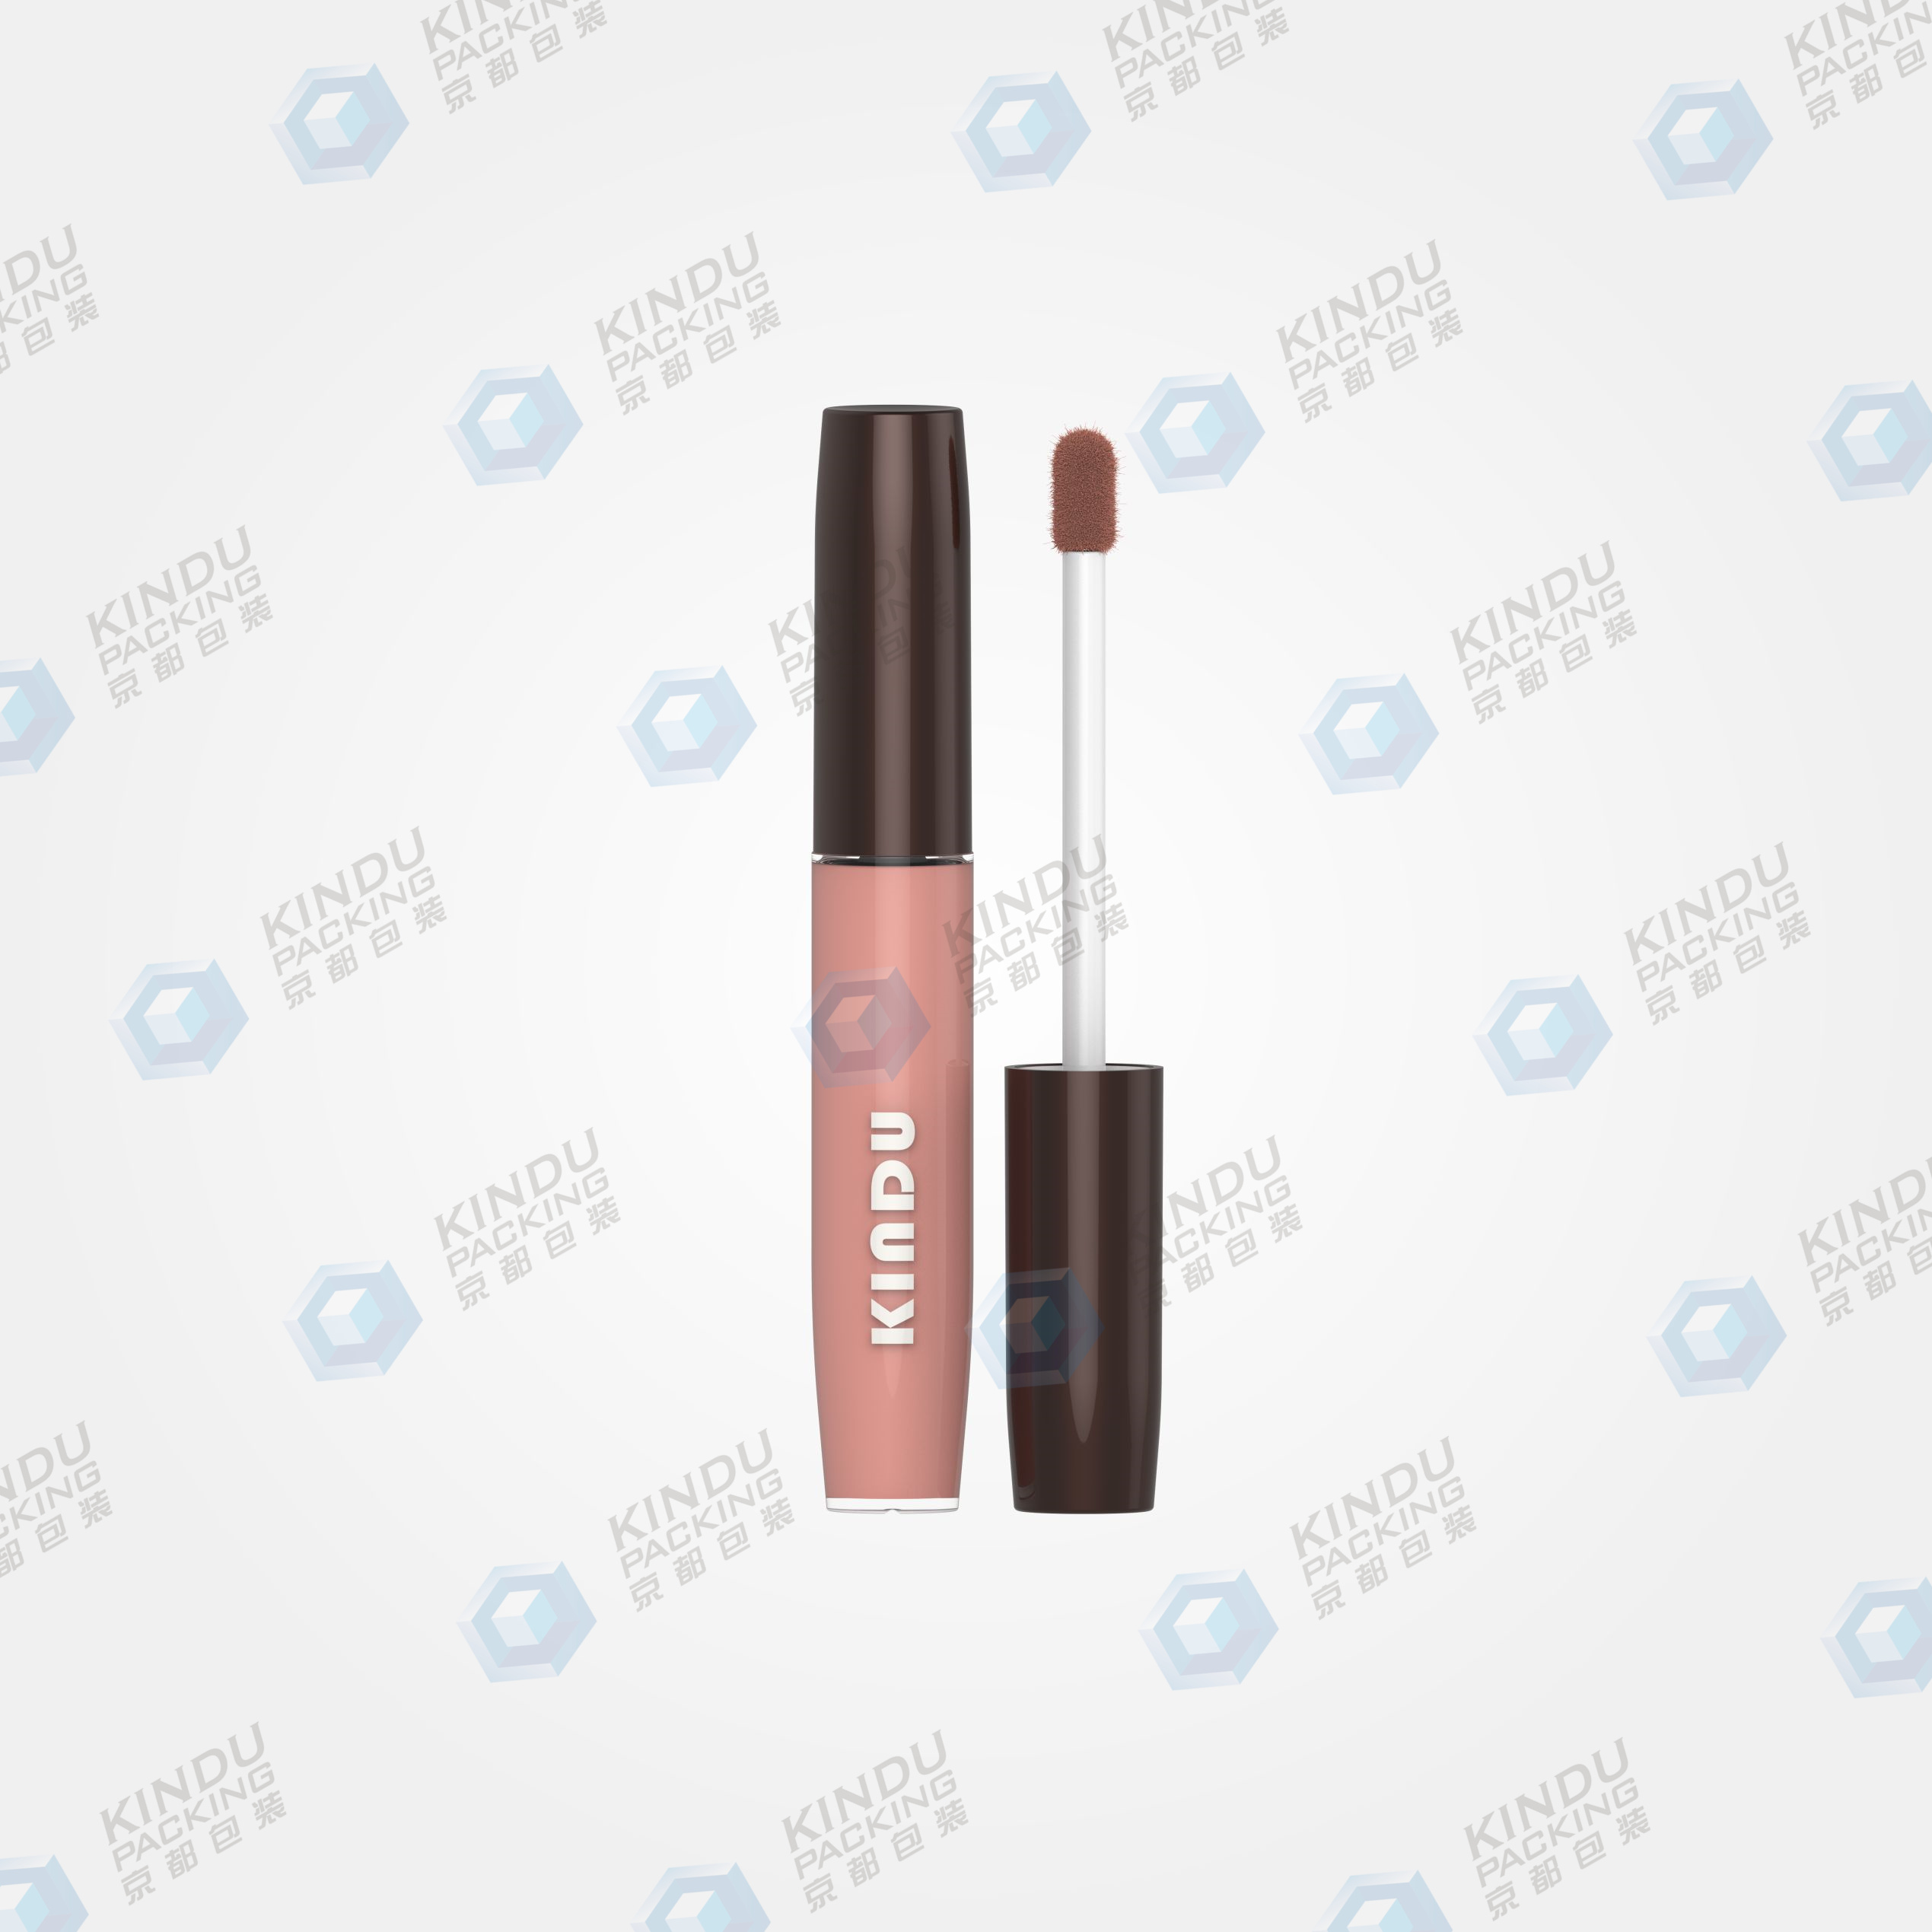 Round lip gloss packaging (ZH-J0208)